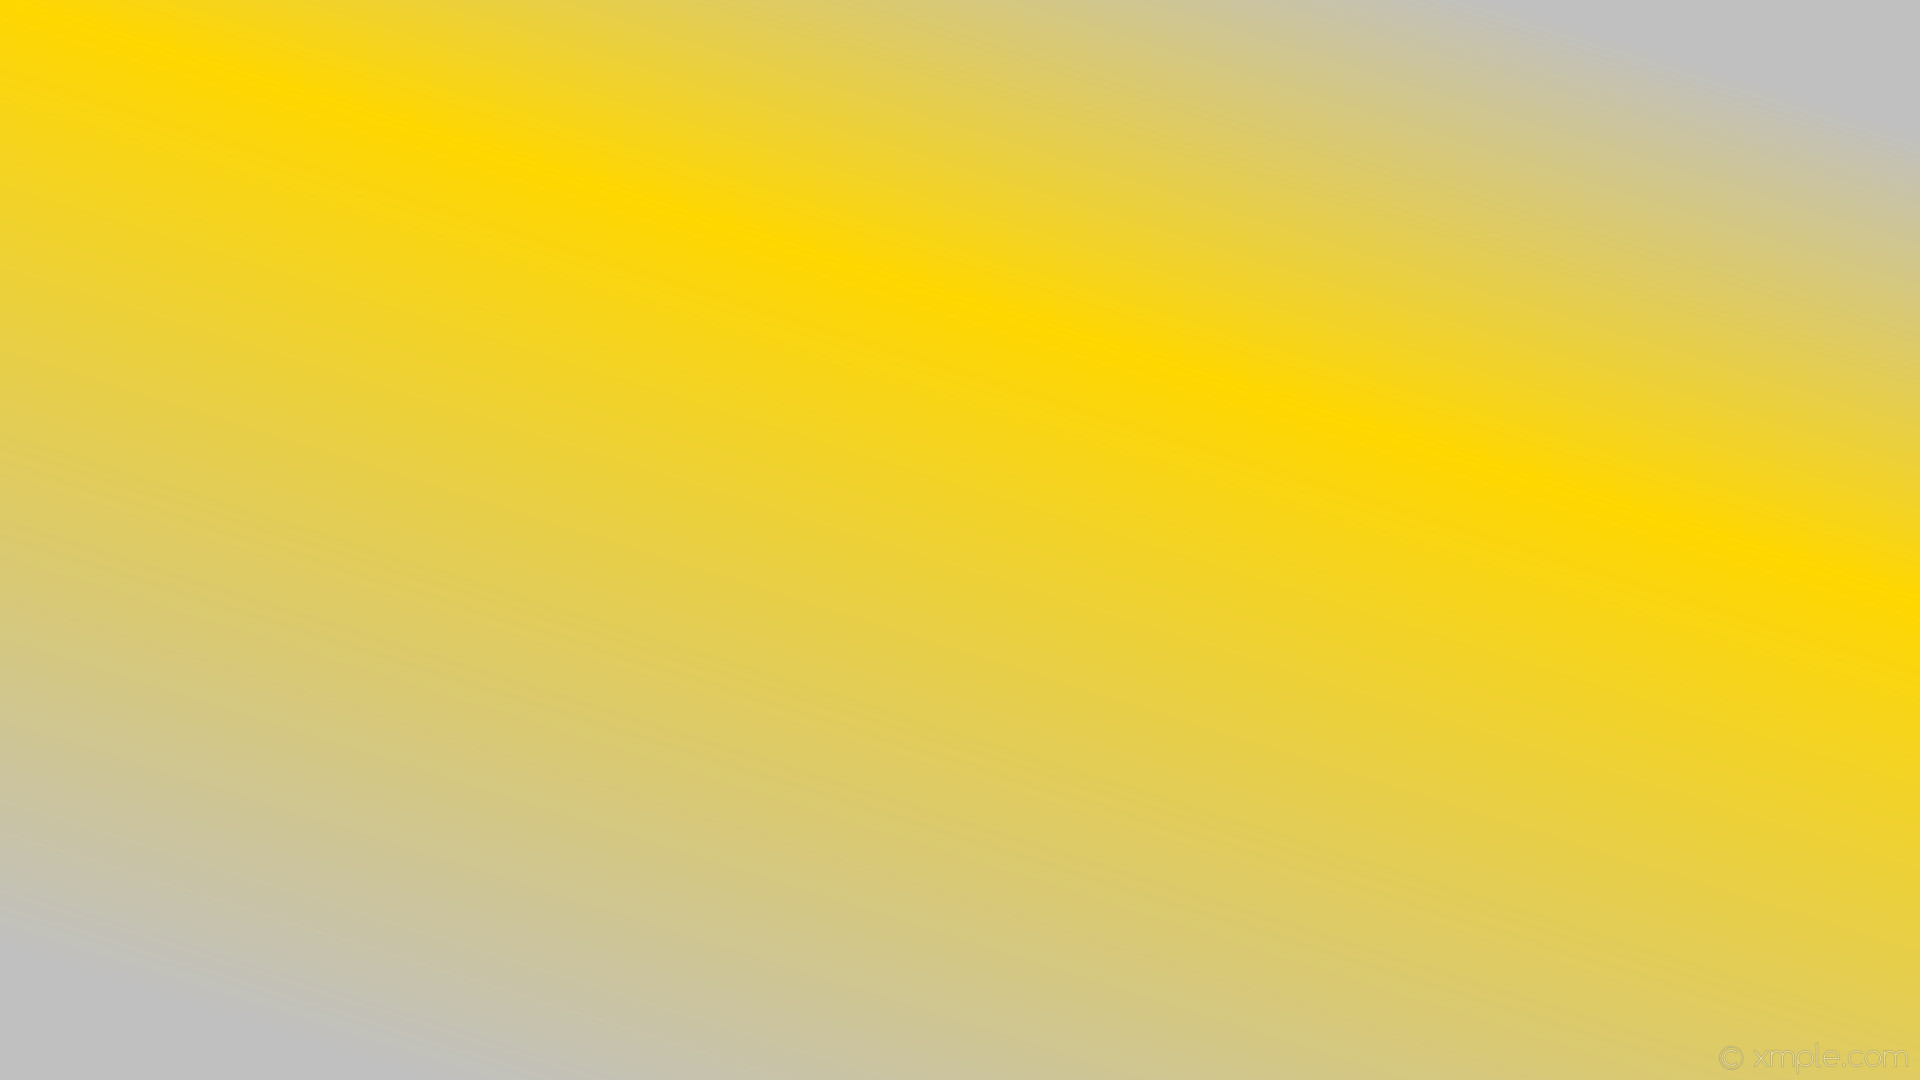 1920x1080 wallpaper gradient highlight linear grey yellow silver gold #c0c0c0 #ffd700  45Â° 33%